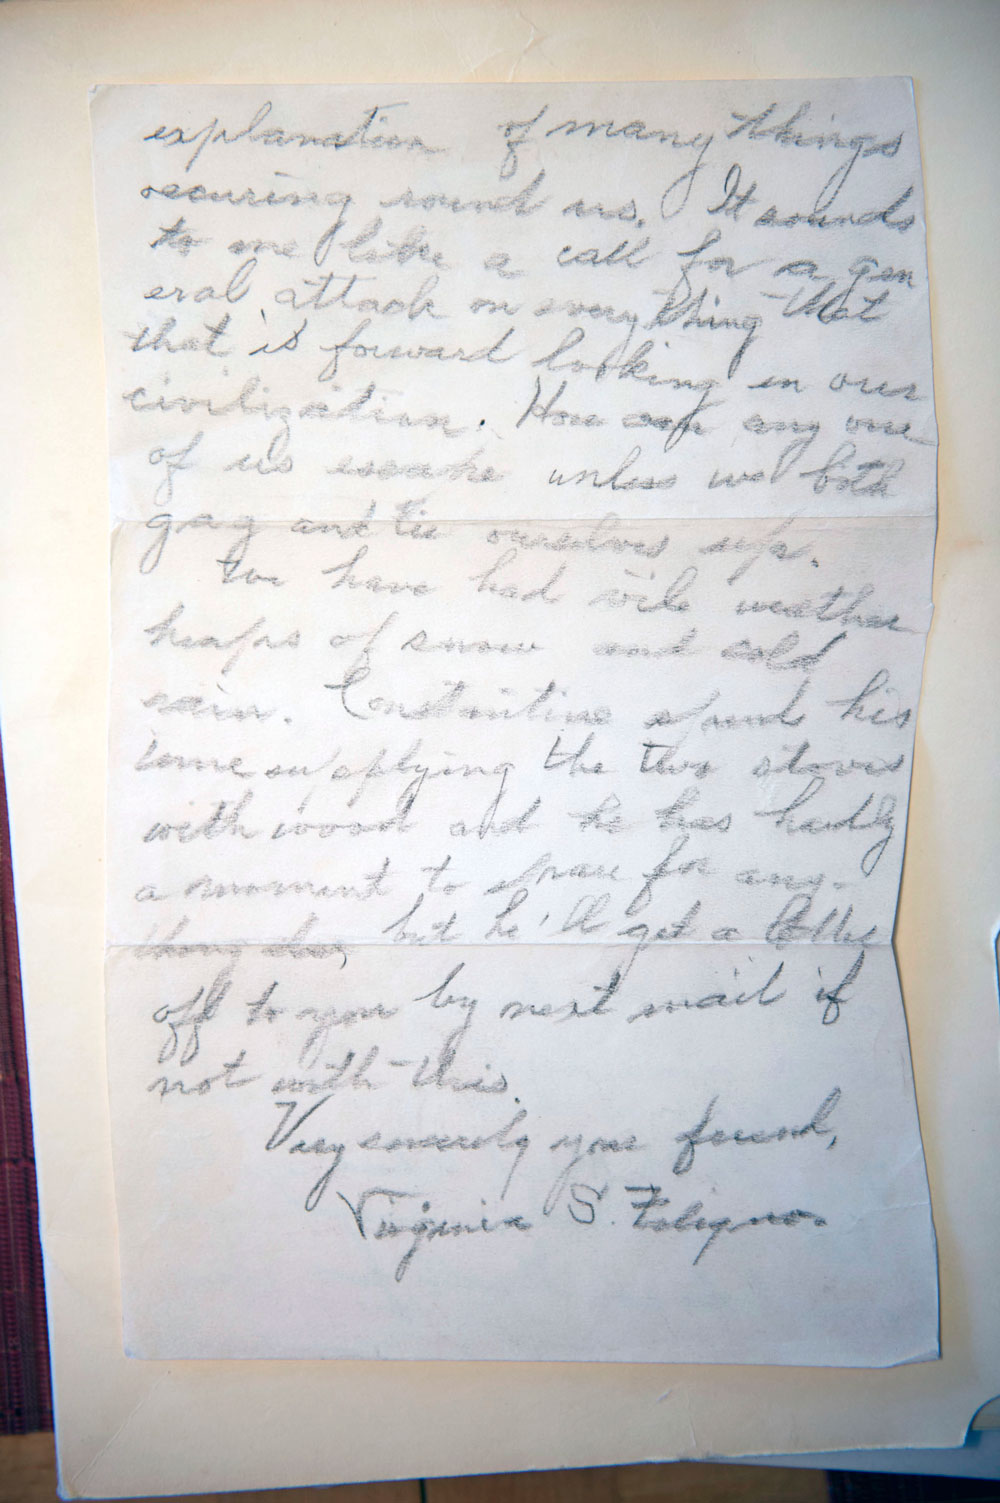 Letter by Virginia Snow Filigno